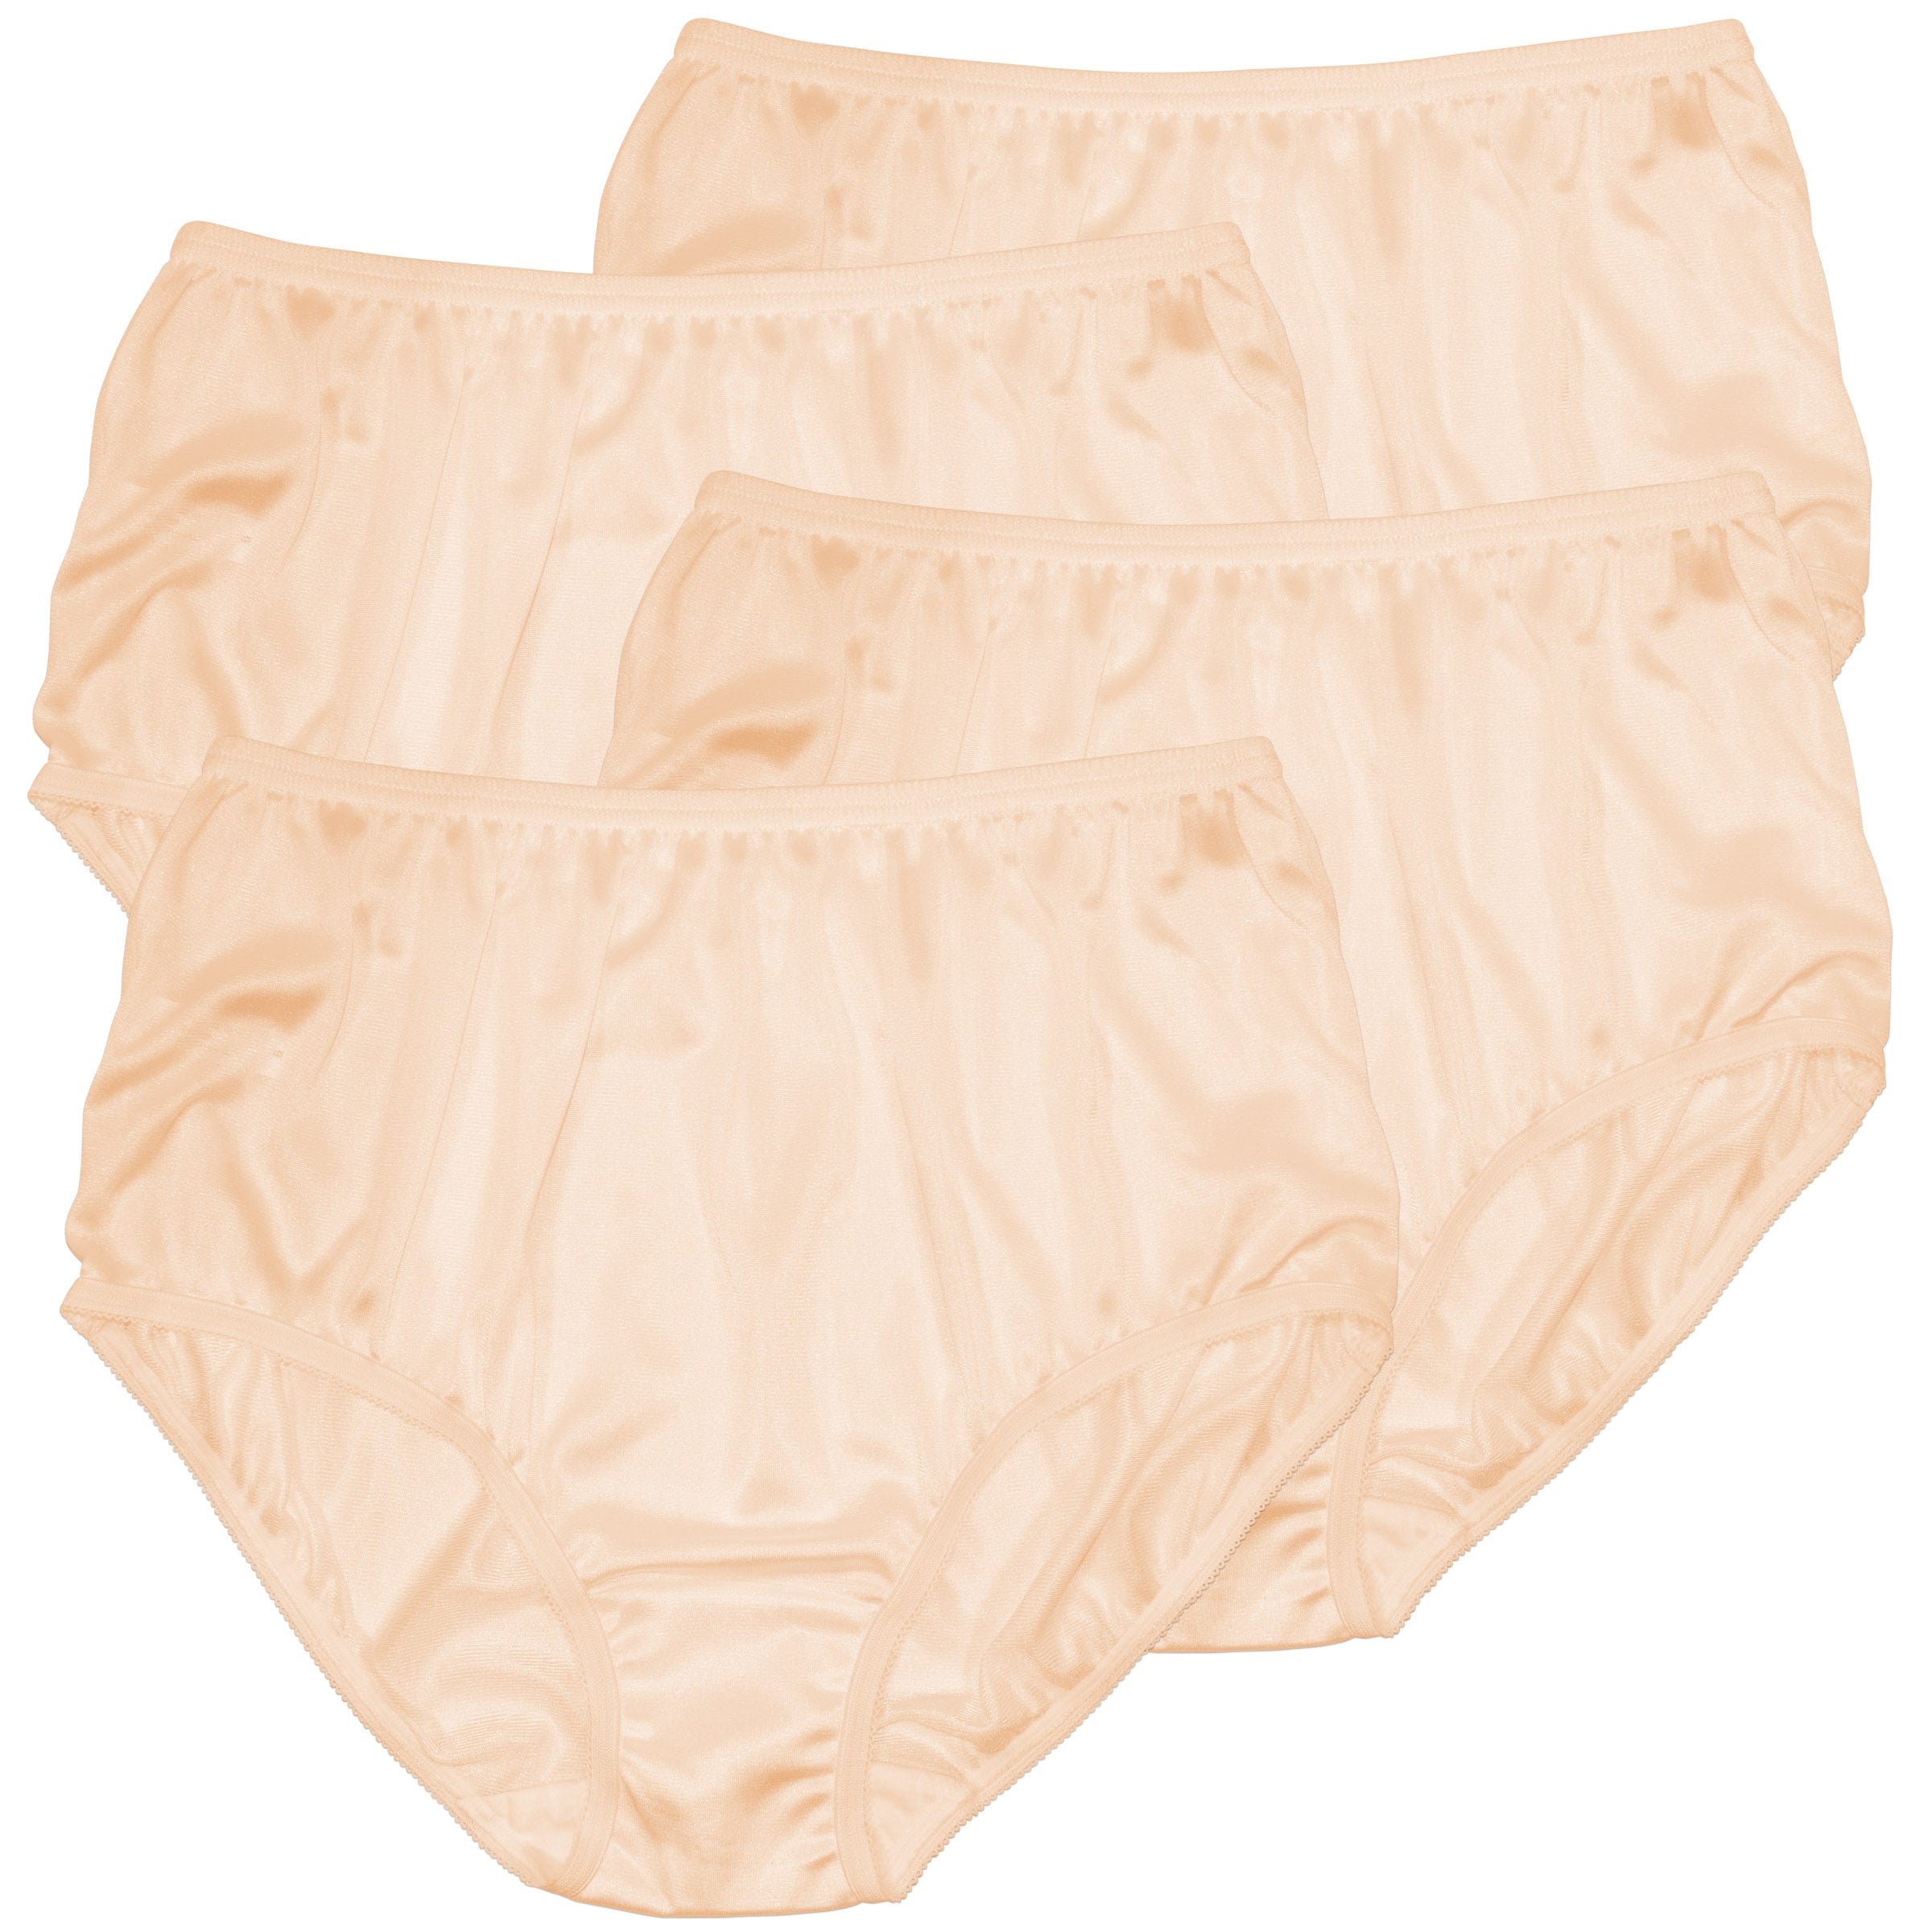 Classic Nylon, Full Coverage Brief Panty Beige 4 Pack (Plain Jane